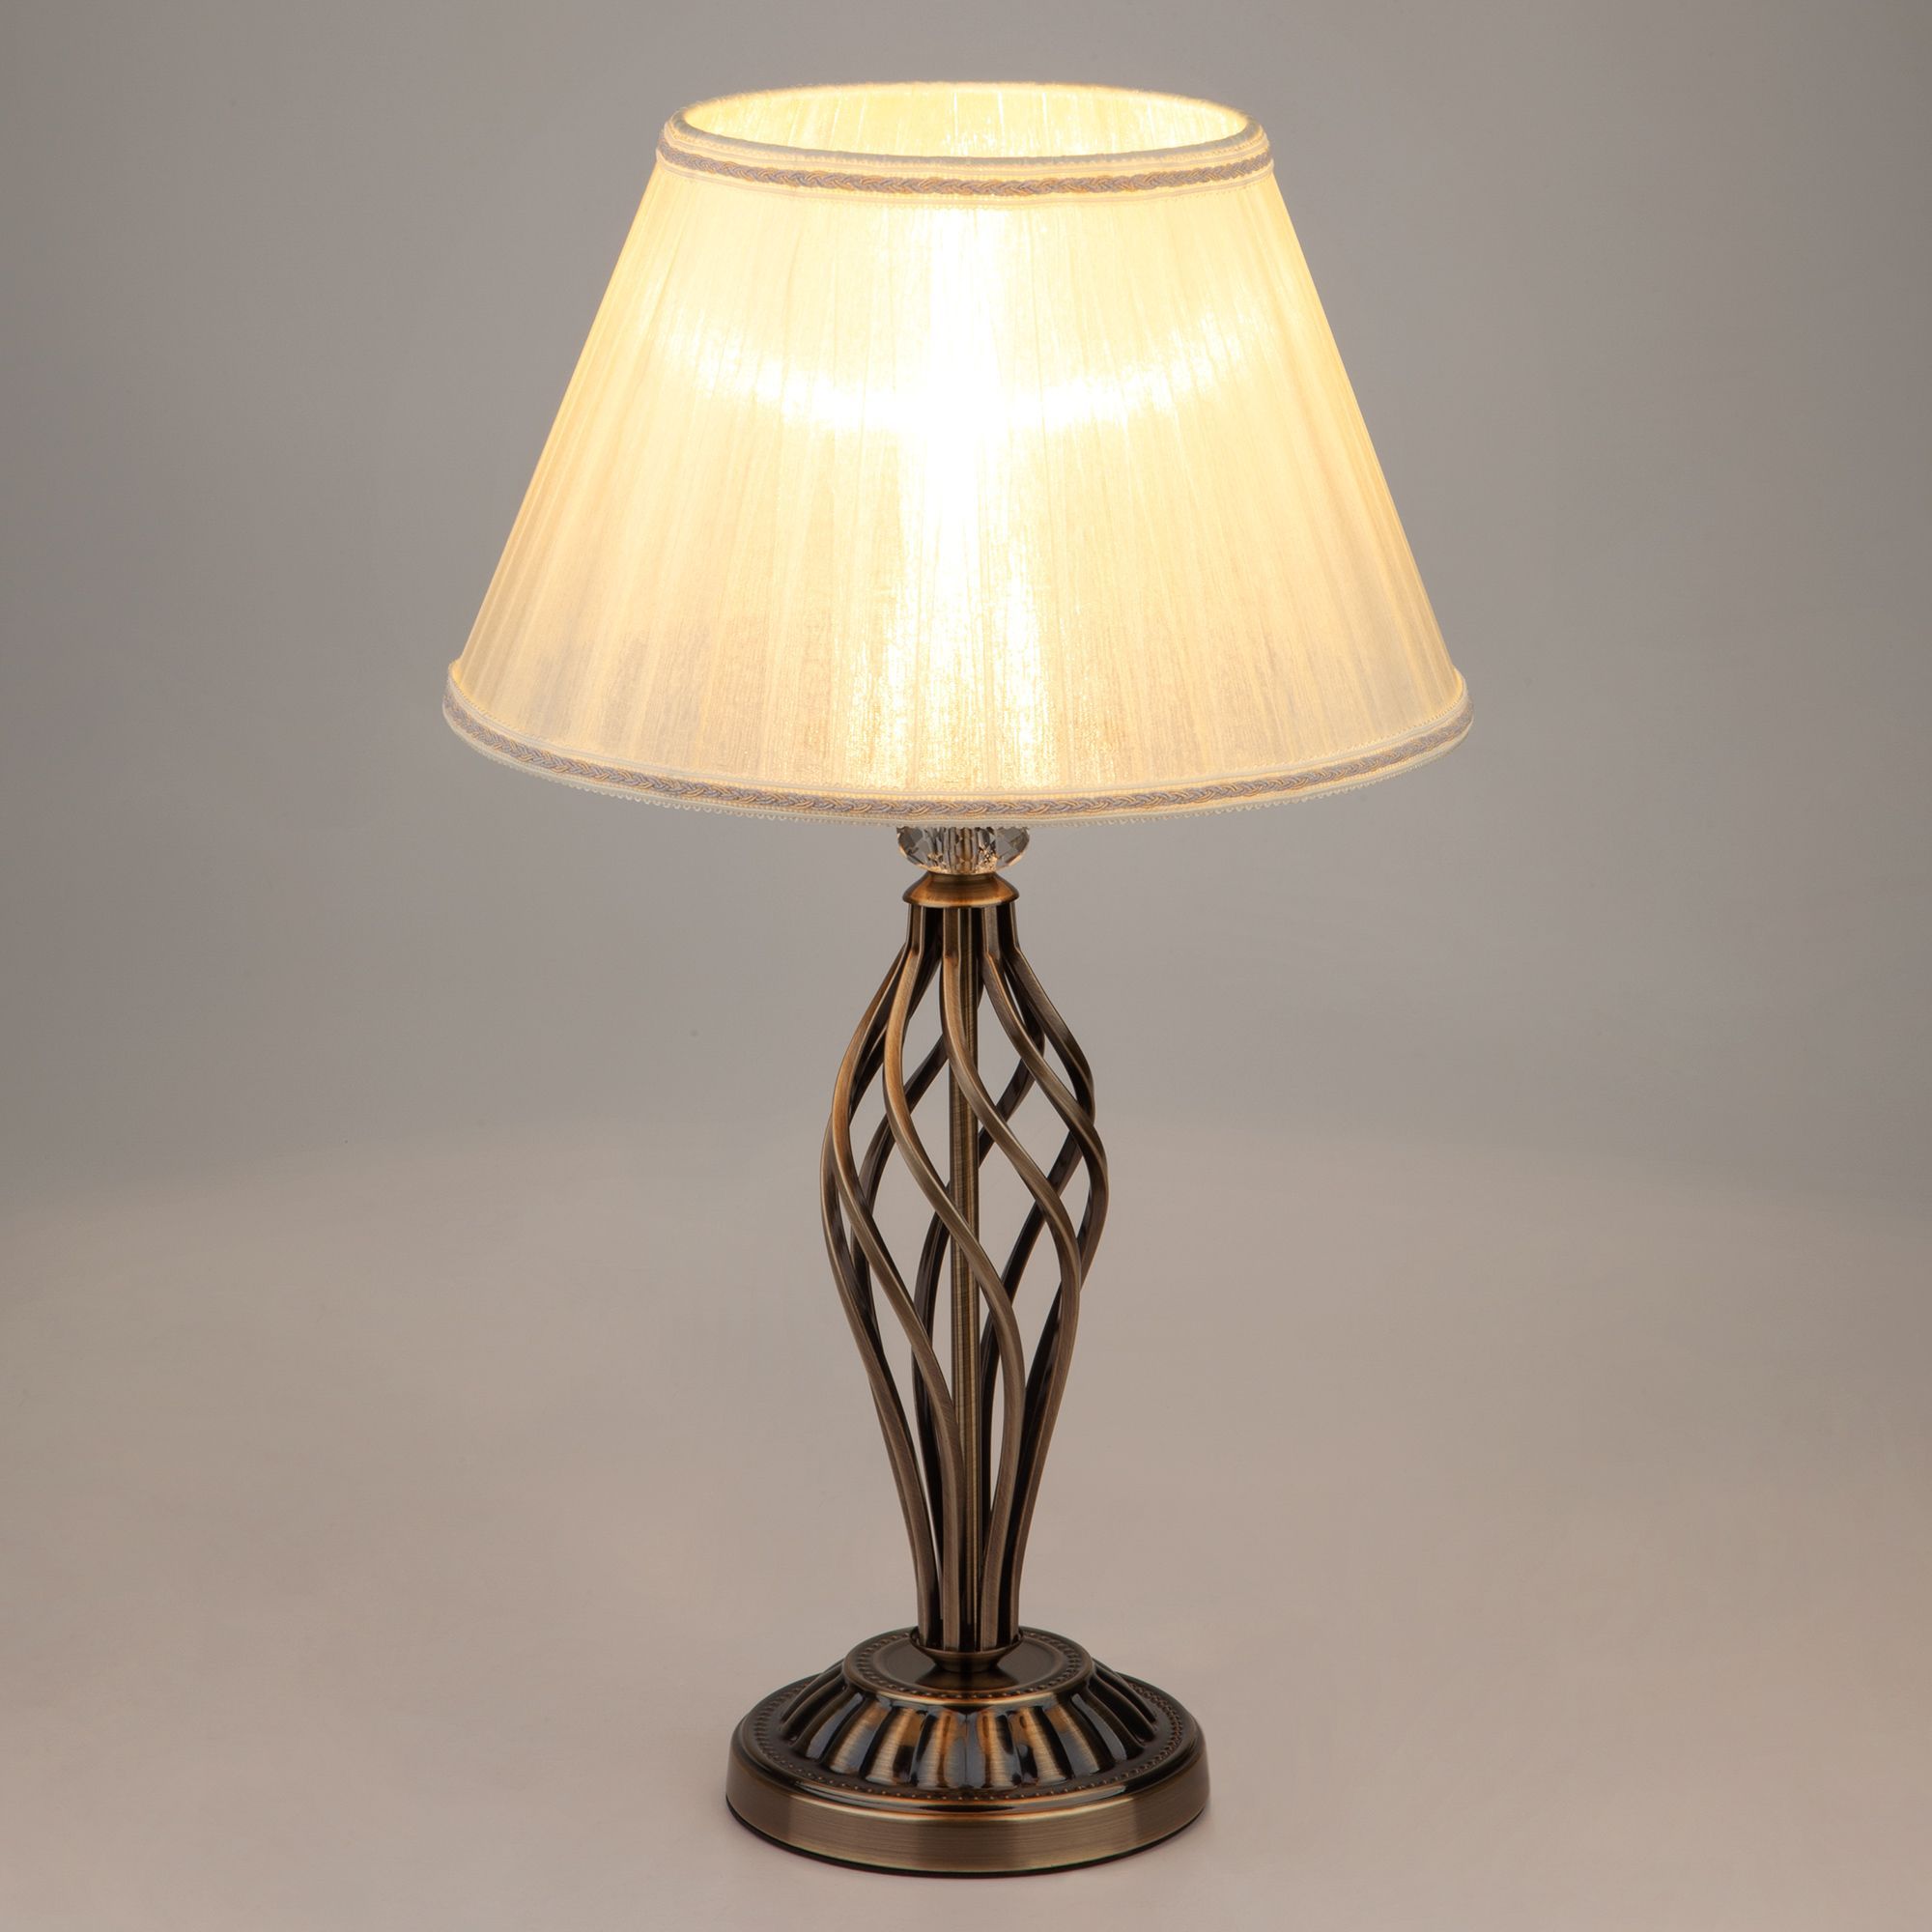 Классическая настольная лампа с абажуром 01002/1 античная бронза Eurosvet - Фото 5